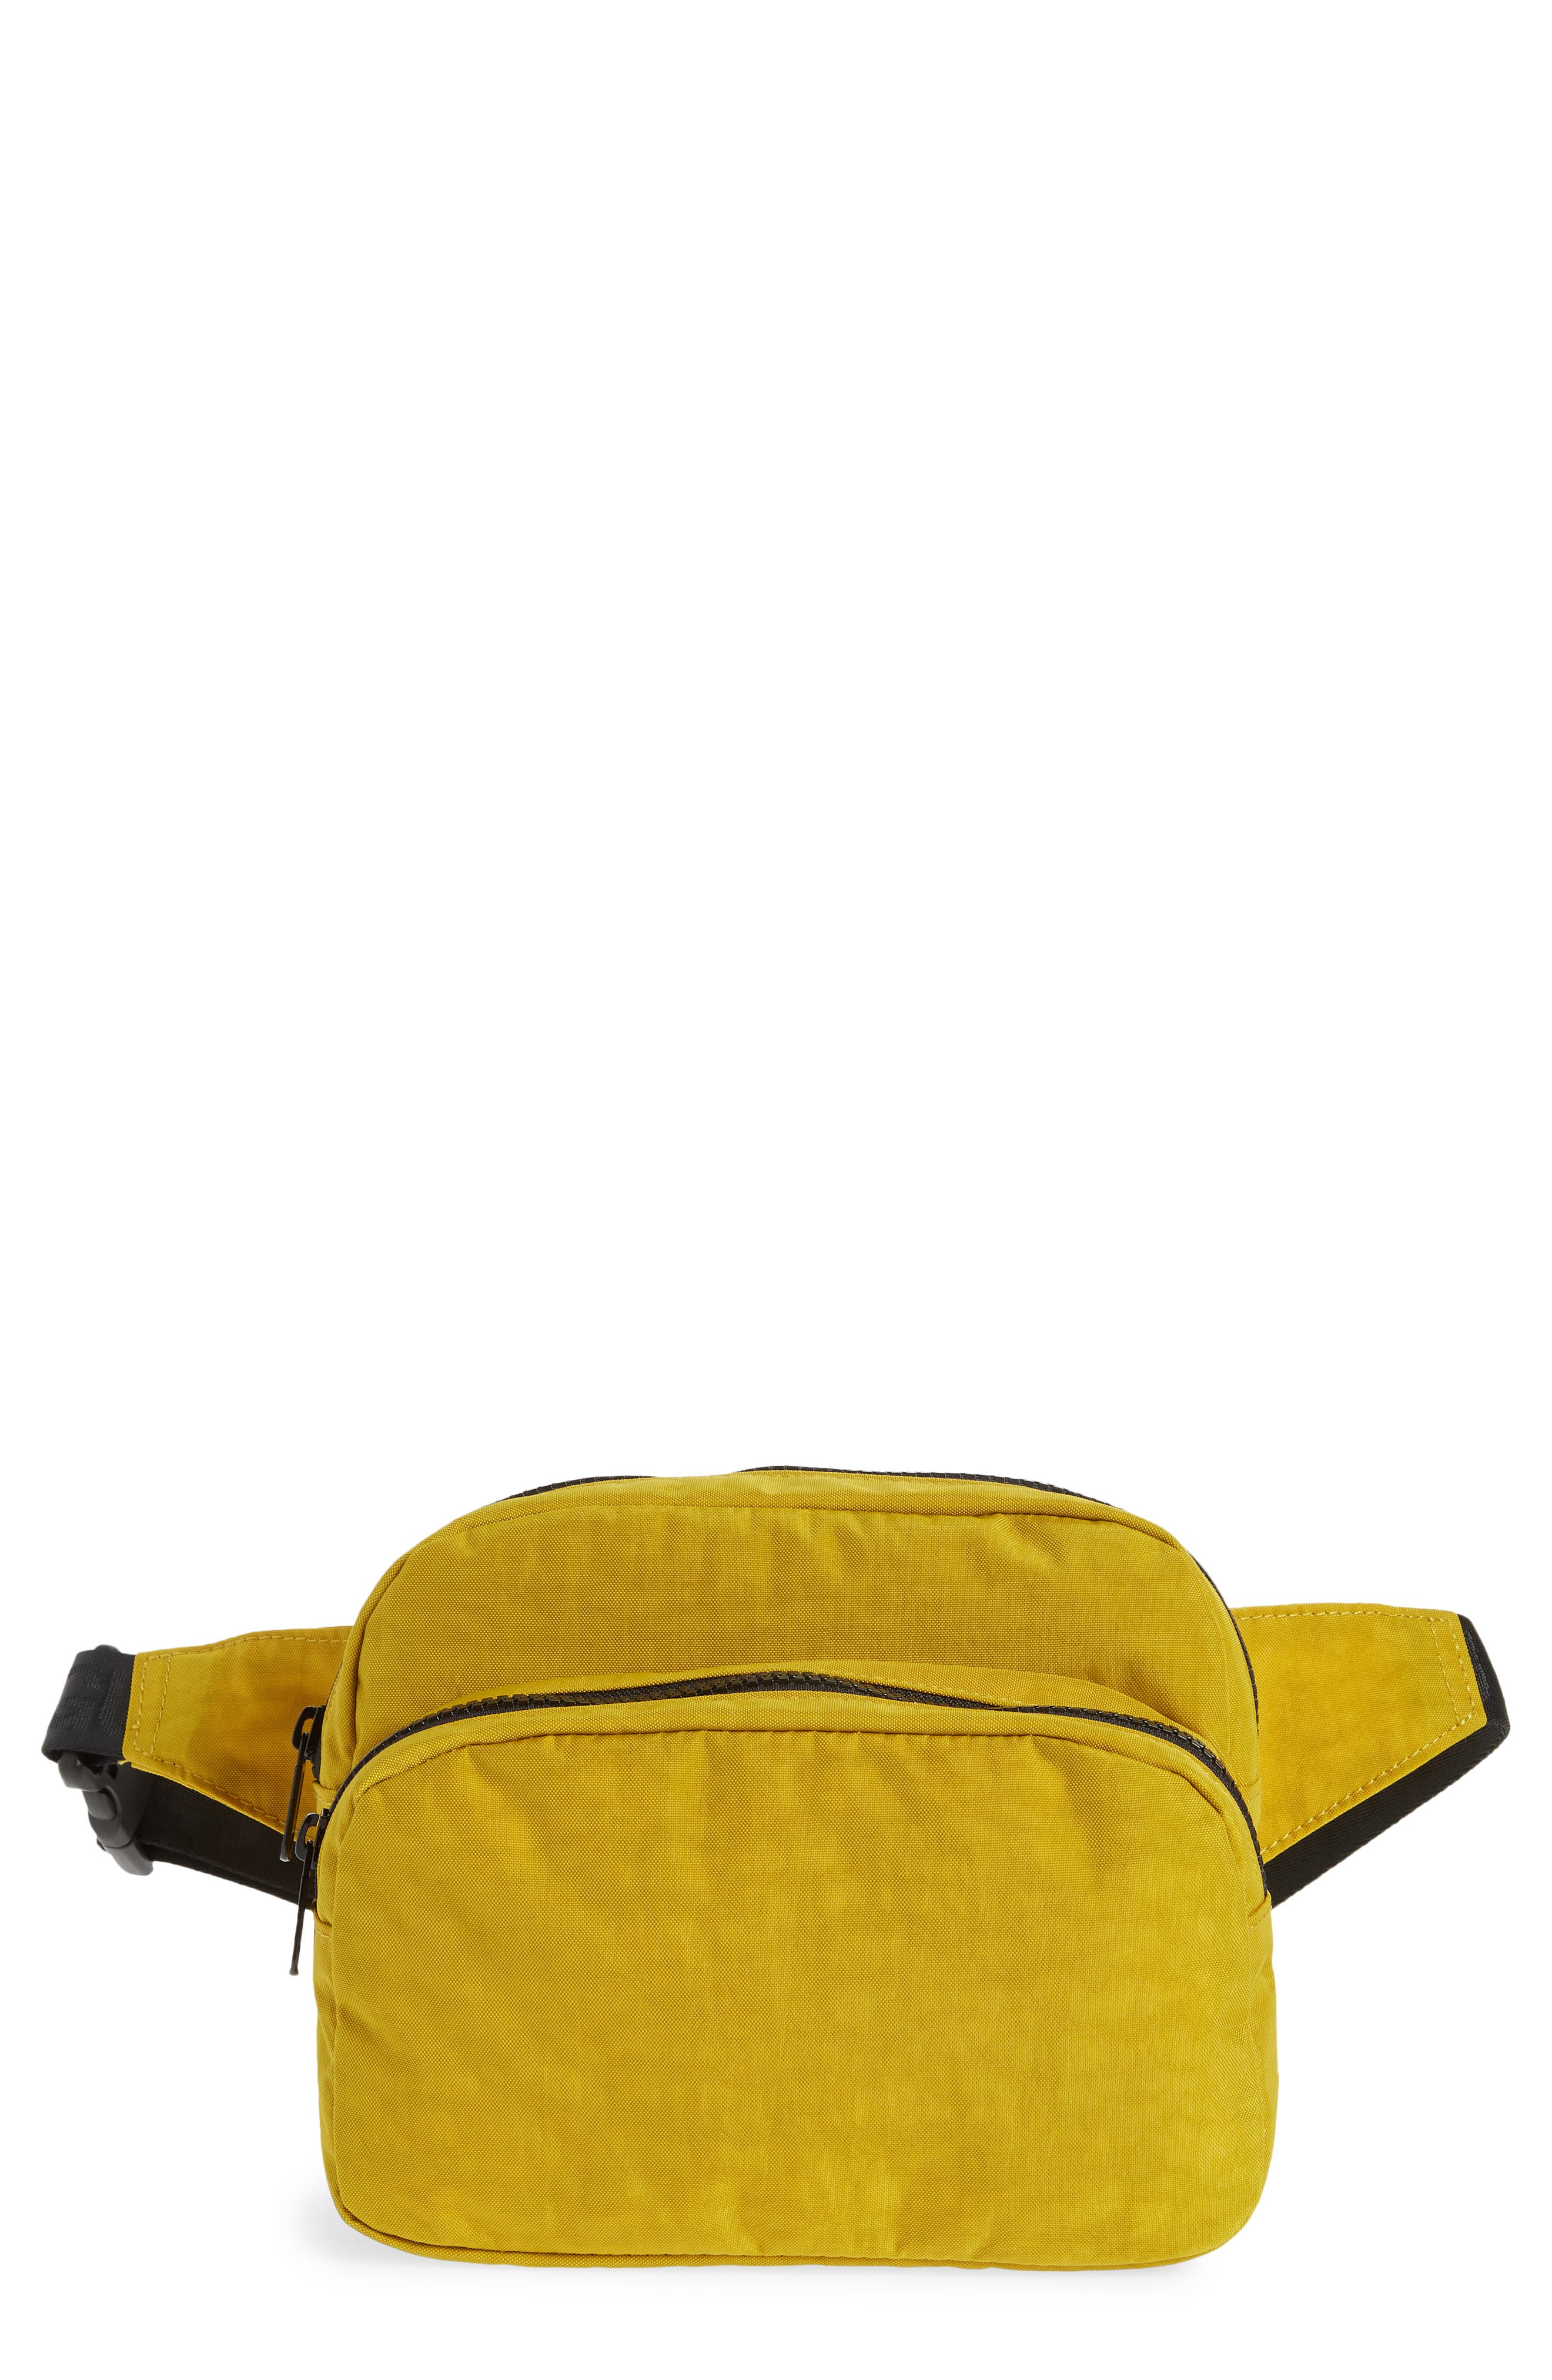 gucci belt bag yellow and black